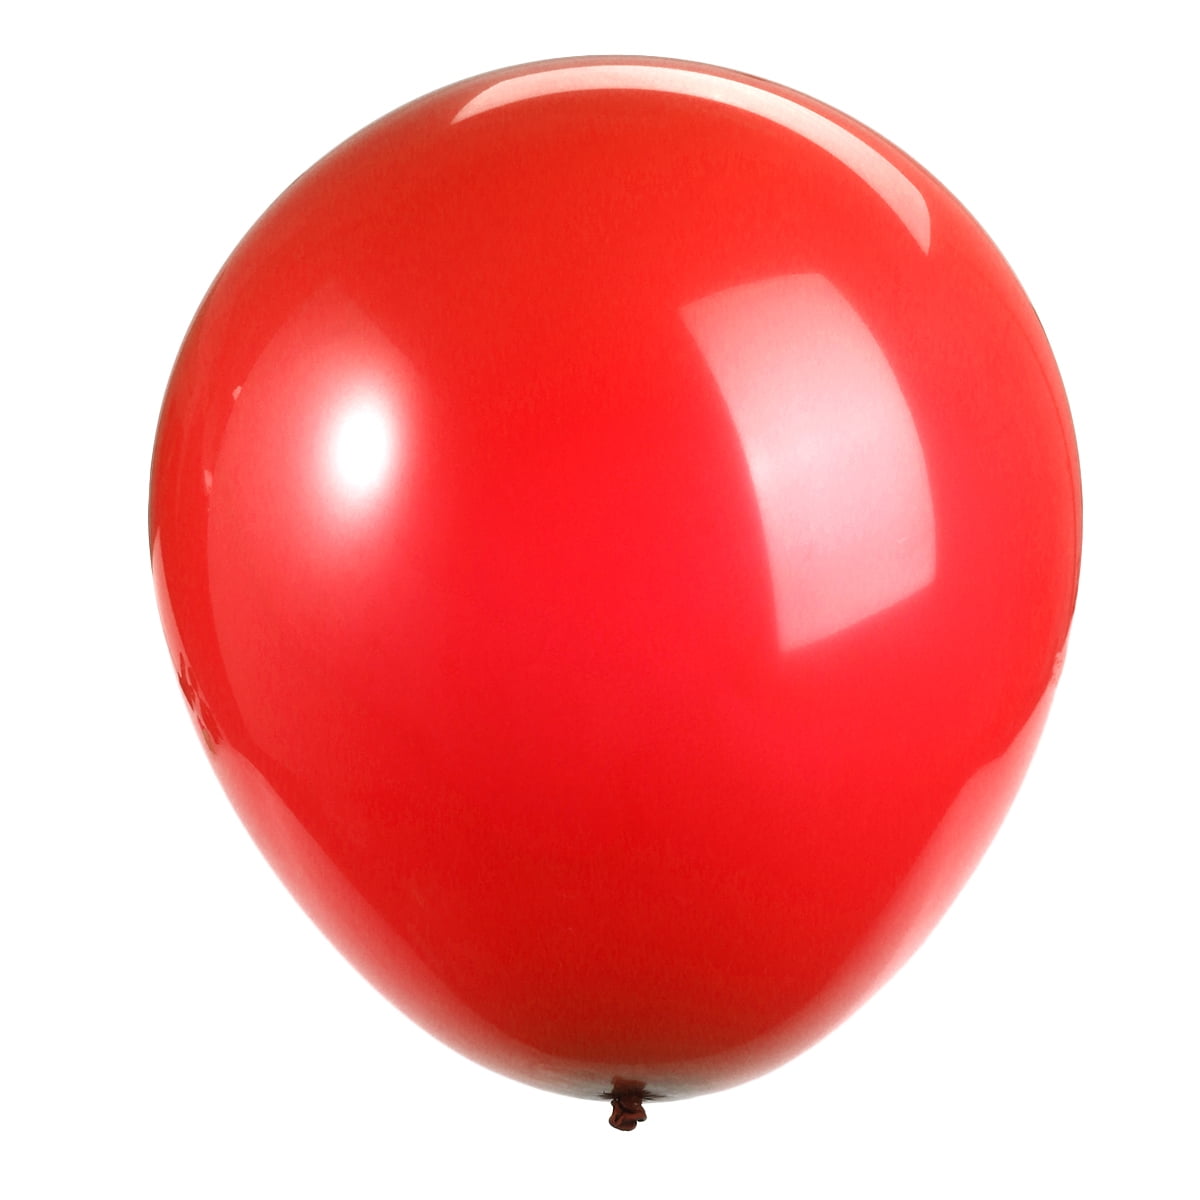 Balloon Popping